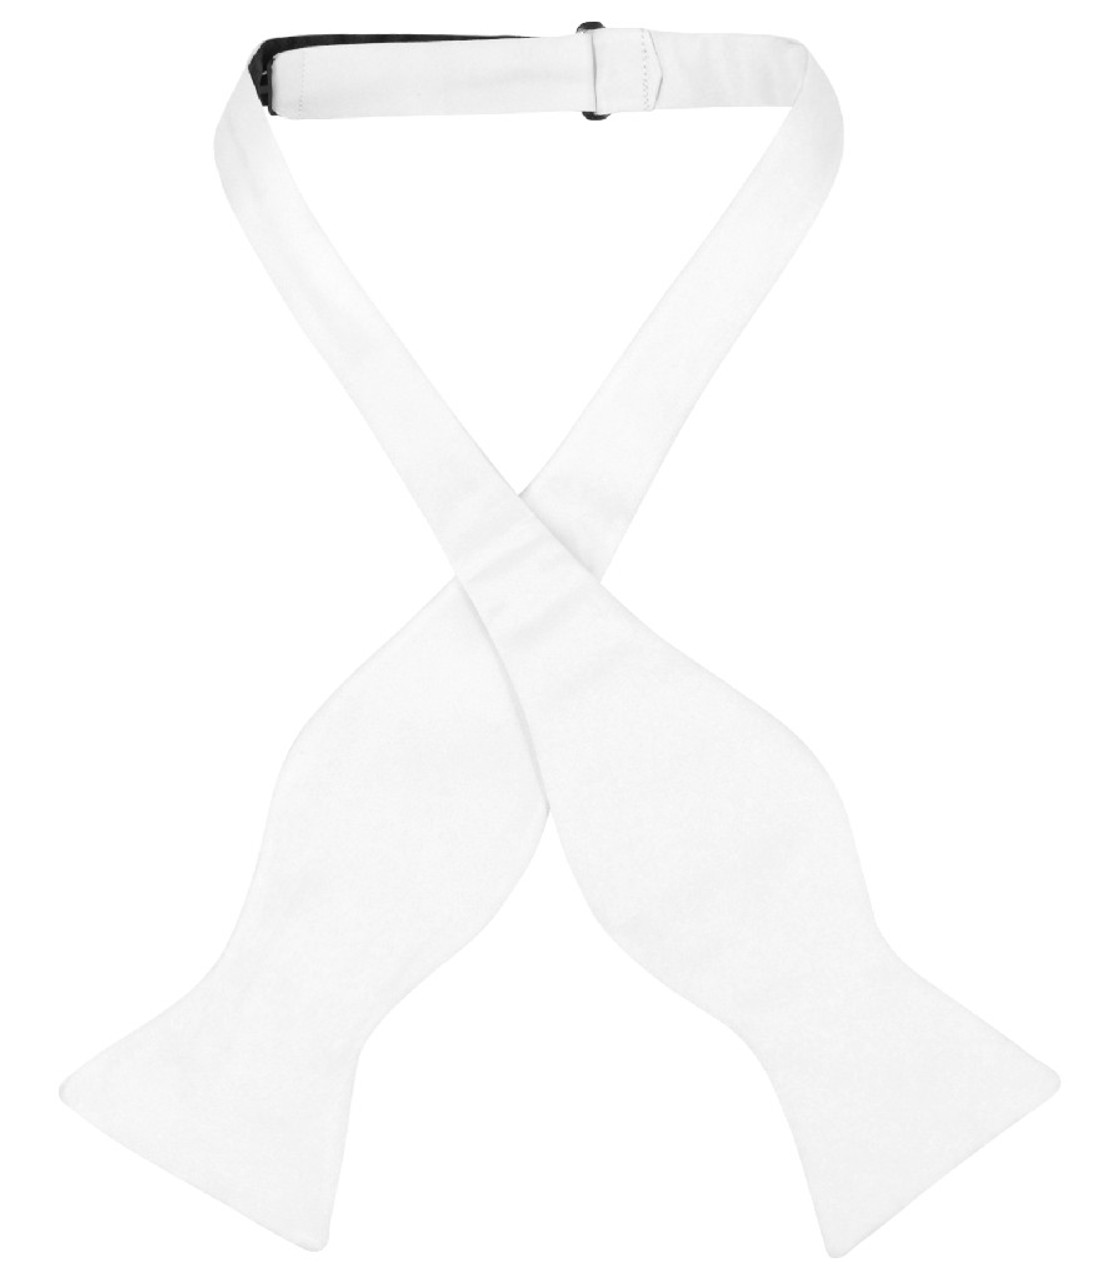 Vesuvio Napoli Self Tie Bow Tie Solid White Color Mens BowTie